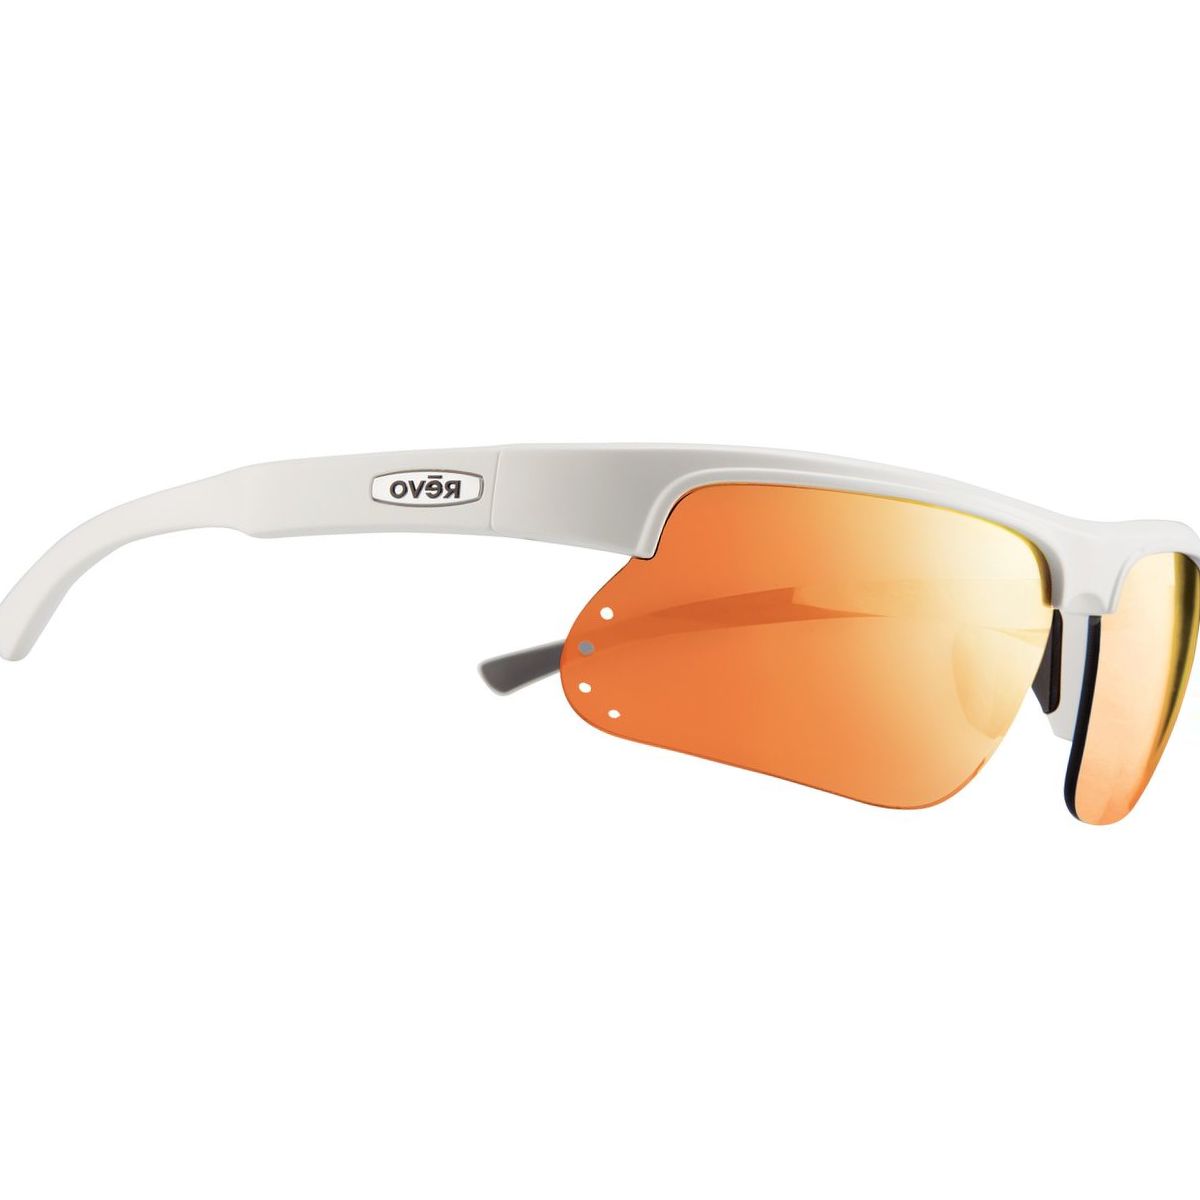 Revo Cusp S Polarized Sunglasses - Men's